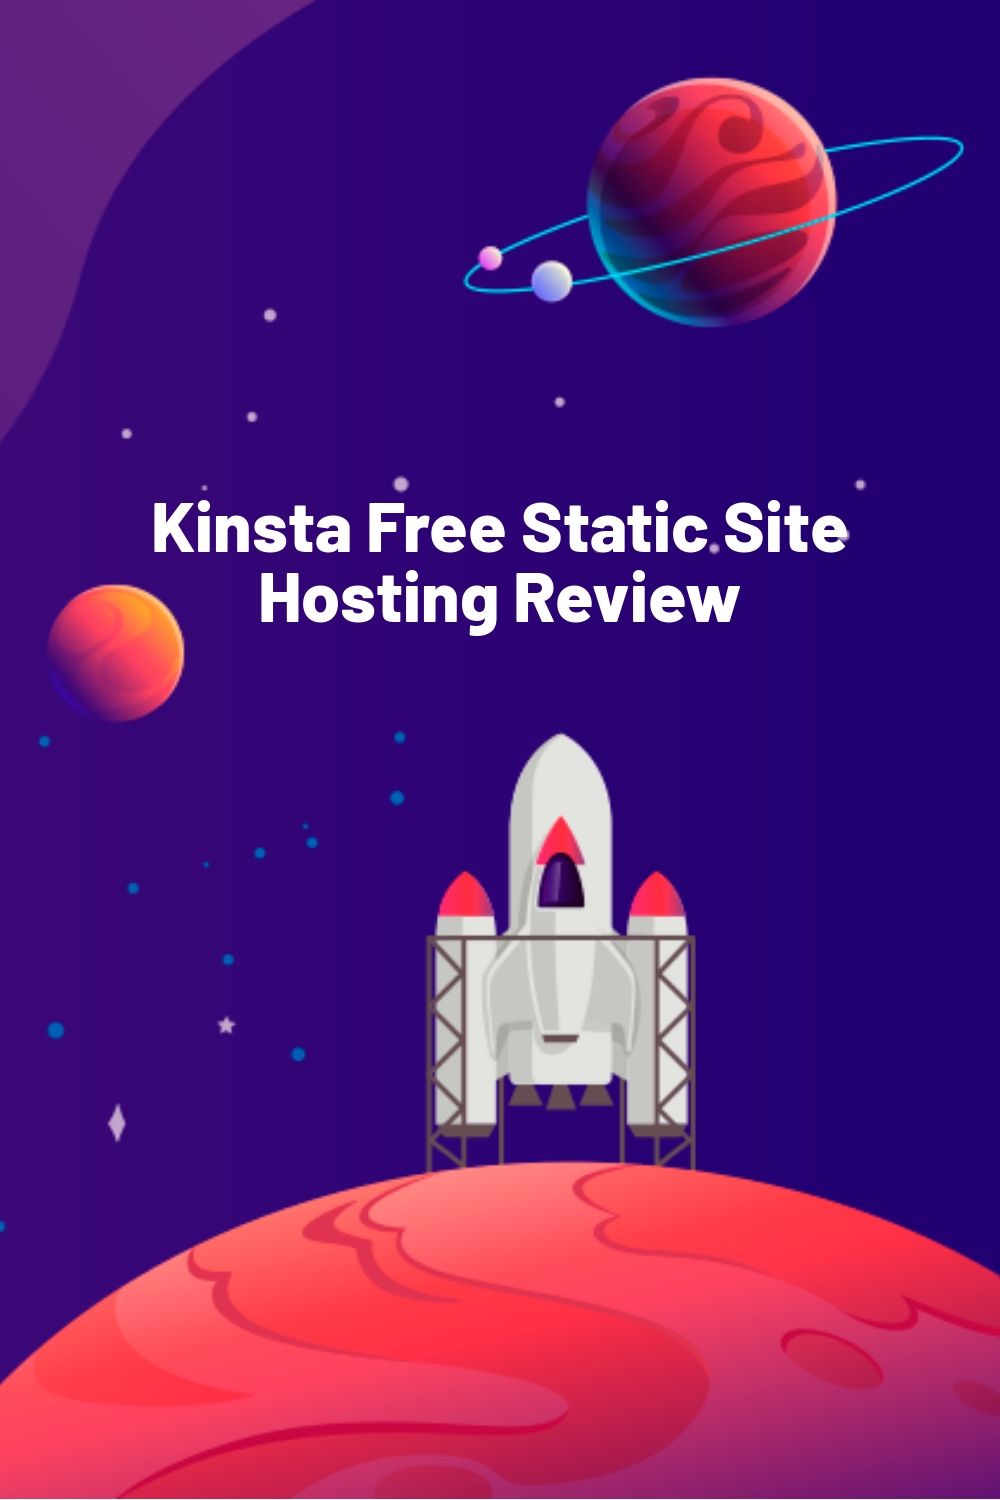 Kinsta Free Static Site Hosting Review